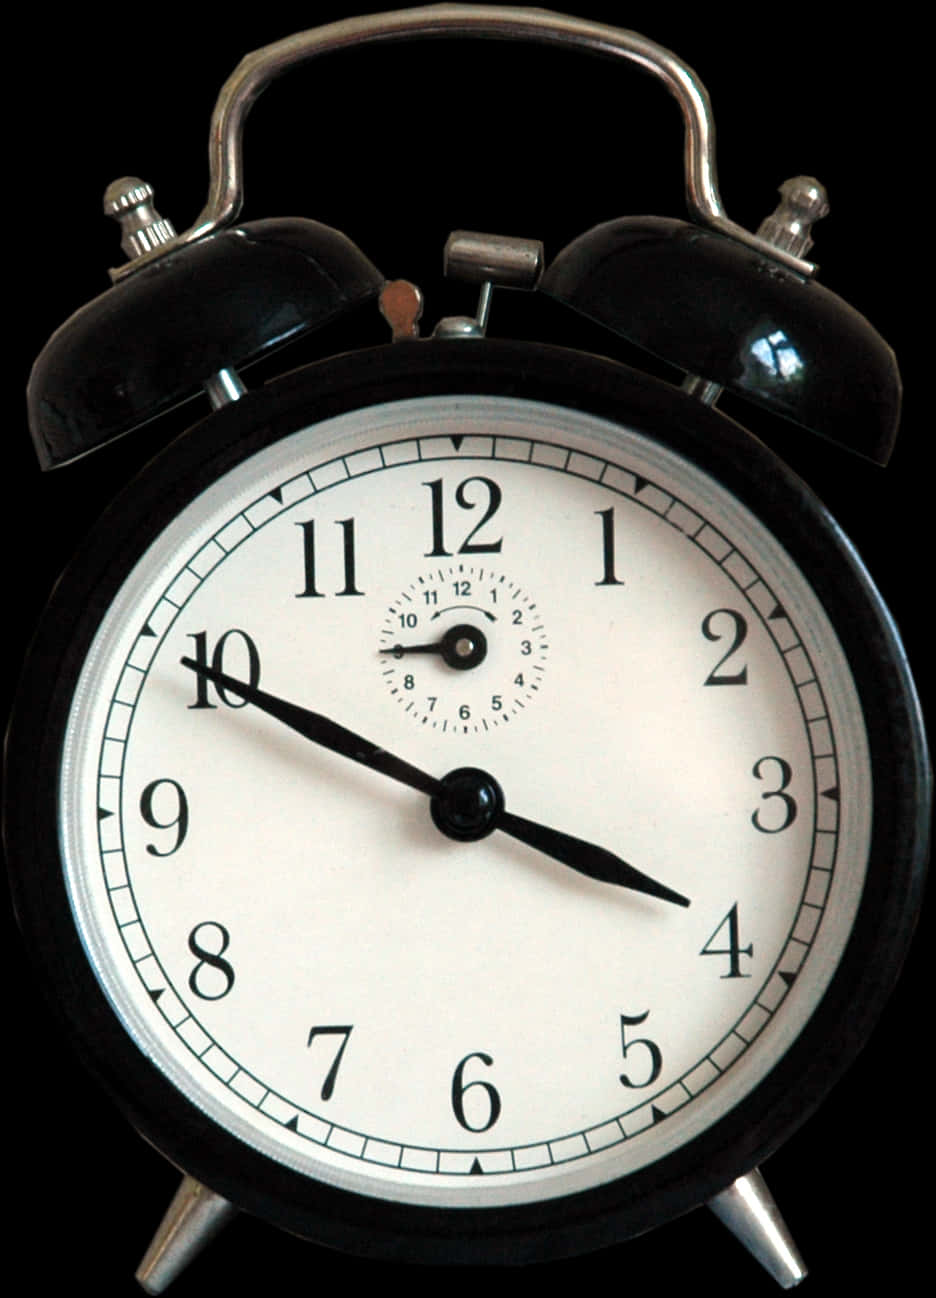 Classic Black Alarm Clock PNG image